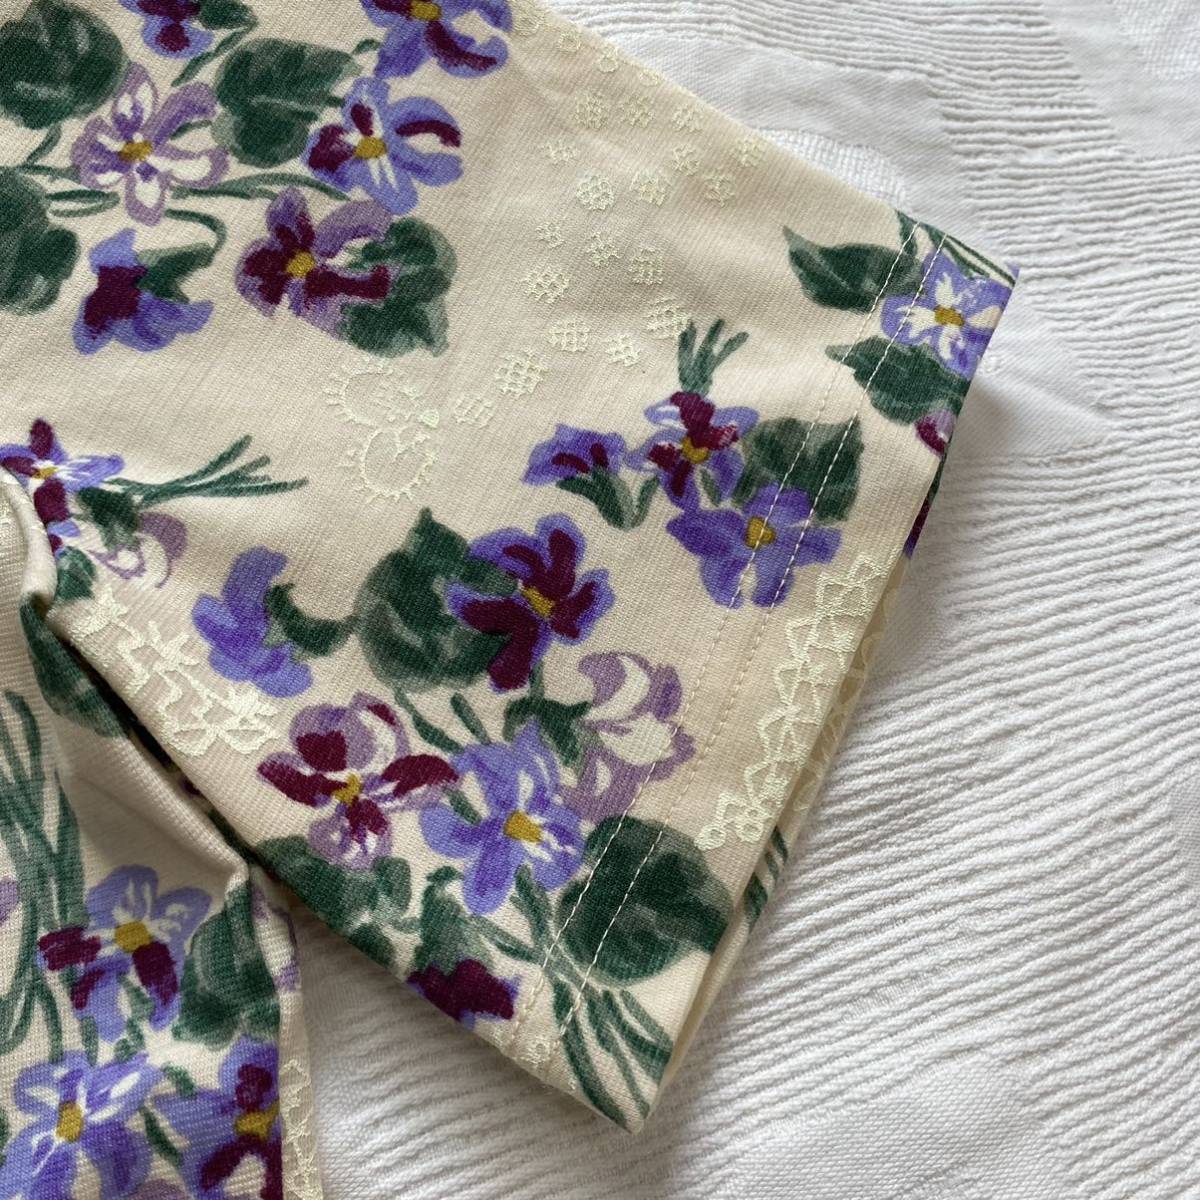 [ beautiful goods ]KEITA MARUYAMA Keita Maruyama * flexible material floral print short sleeves cut and sewn eggshell white unbleached cloth size 2 a22060810